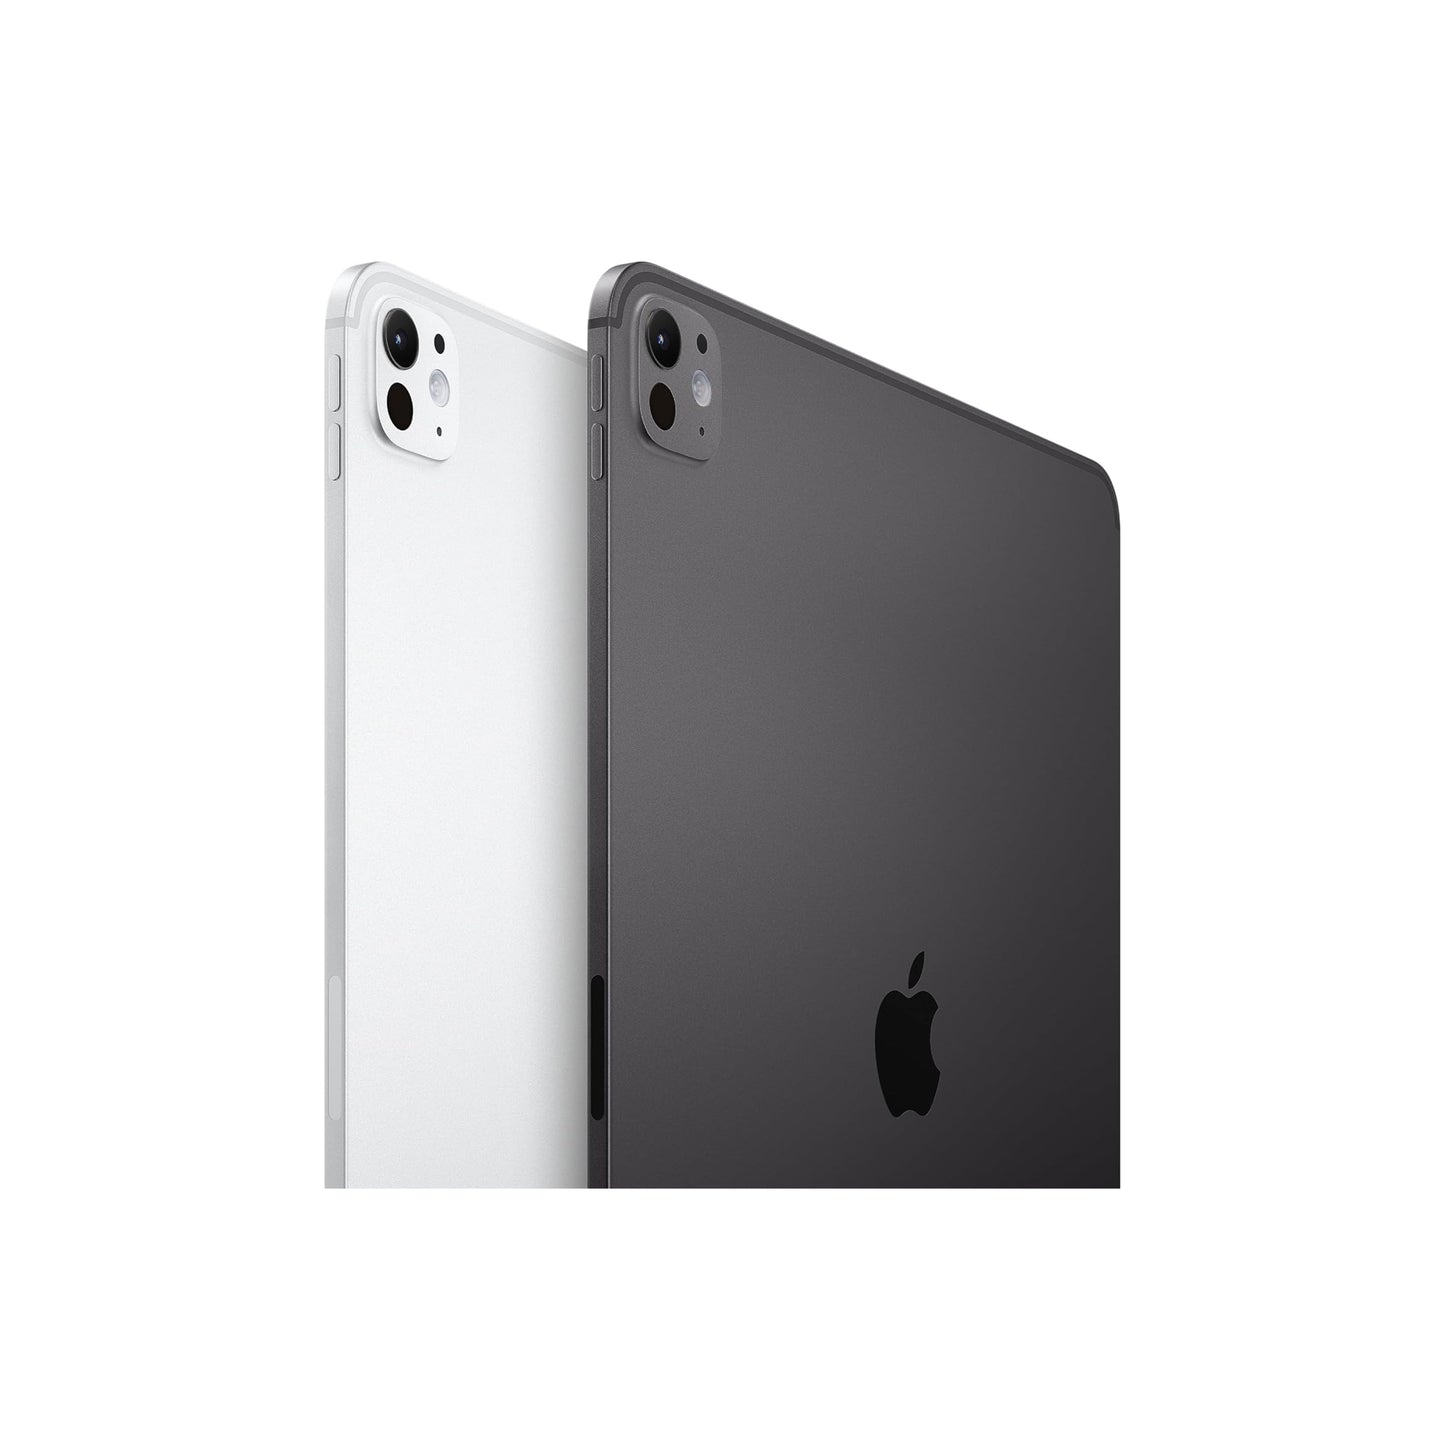 Apple iPad Pro 13 بوصة (M4): شاشة Ultra Retina XDR - زجاج نانو، 1 تيرابايت، كاميرا أمامية 12 ميجابكسل / كاميرا خلفية 12 ميجابكسل، ماسح ضوئي LiDAR، Wi-Fi 6E، معرف الوجه، عمر بطارية يدوم طوال اليوم - أسود فلكي